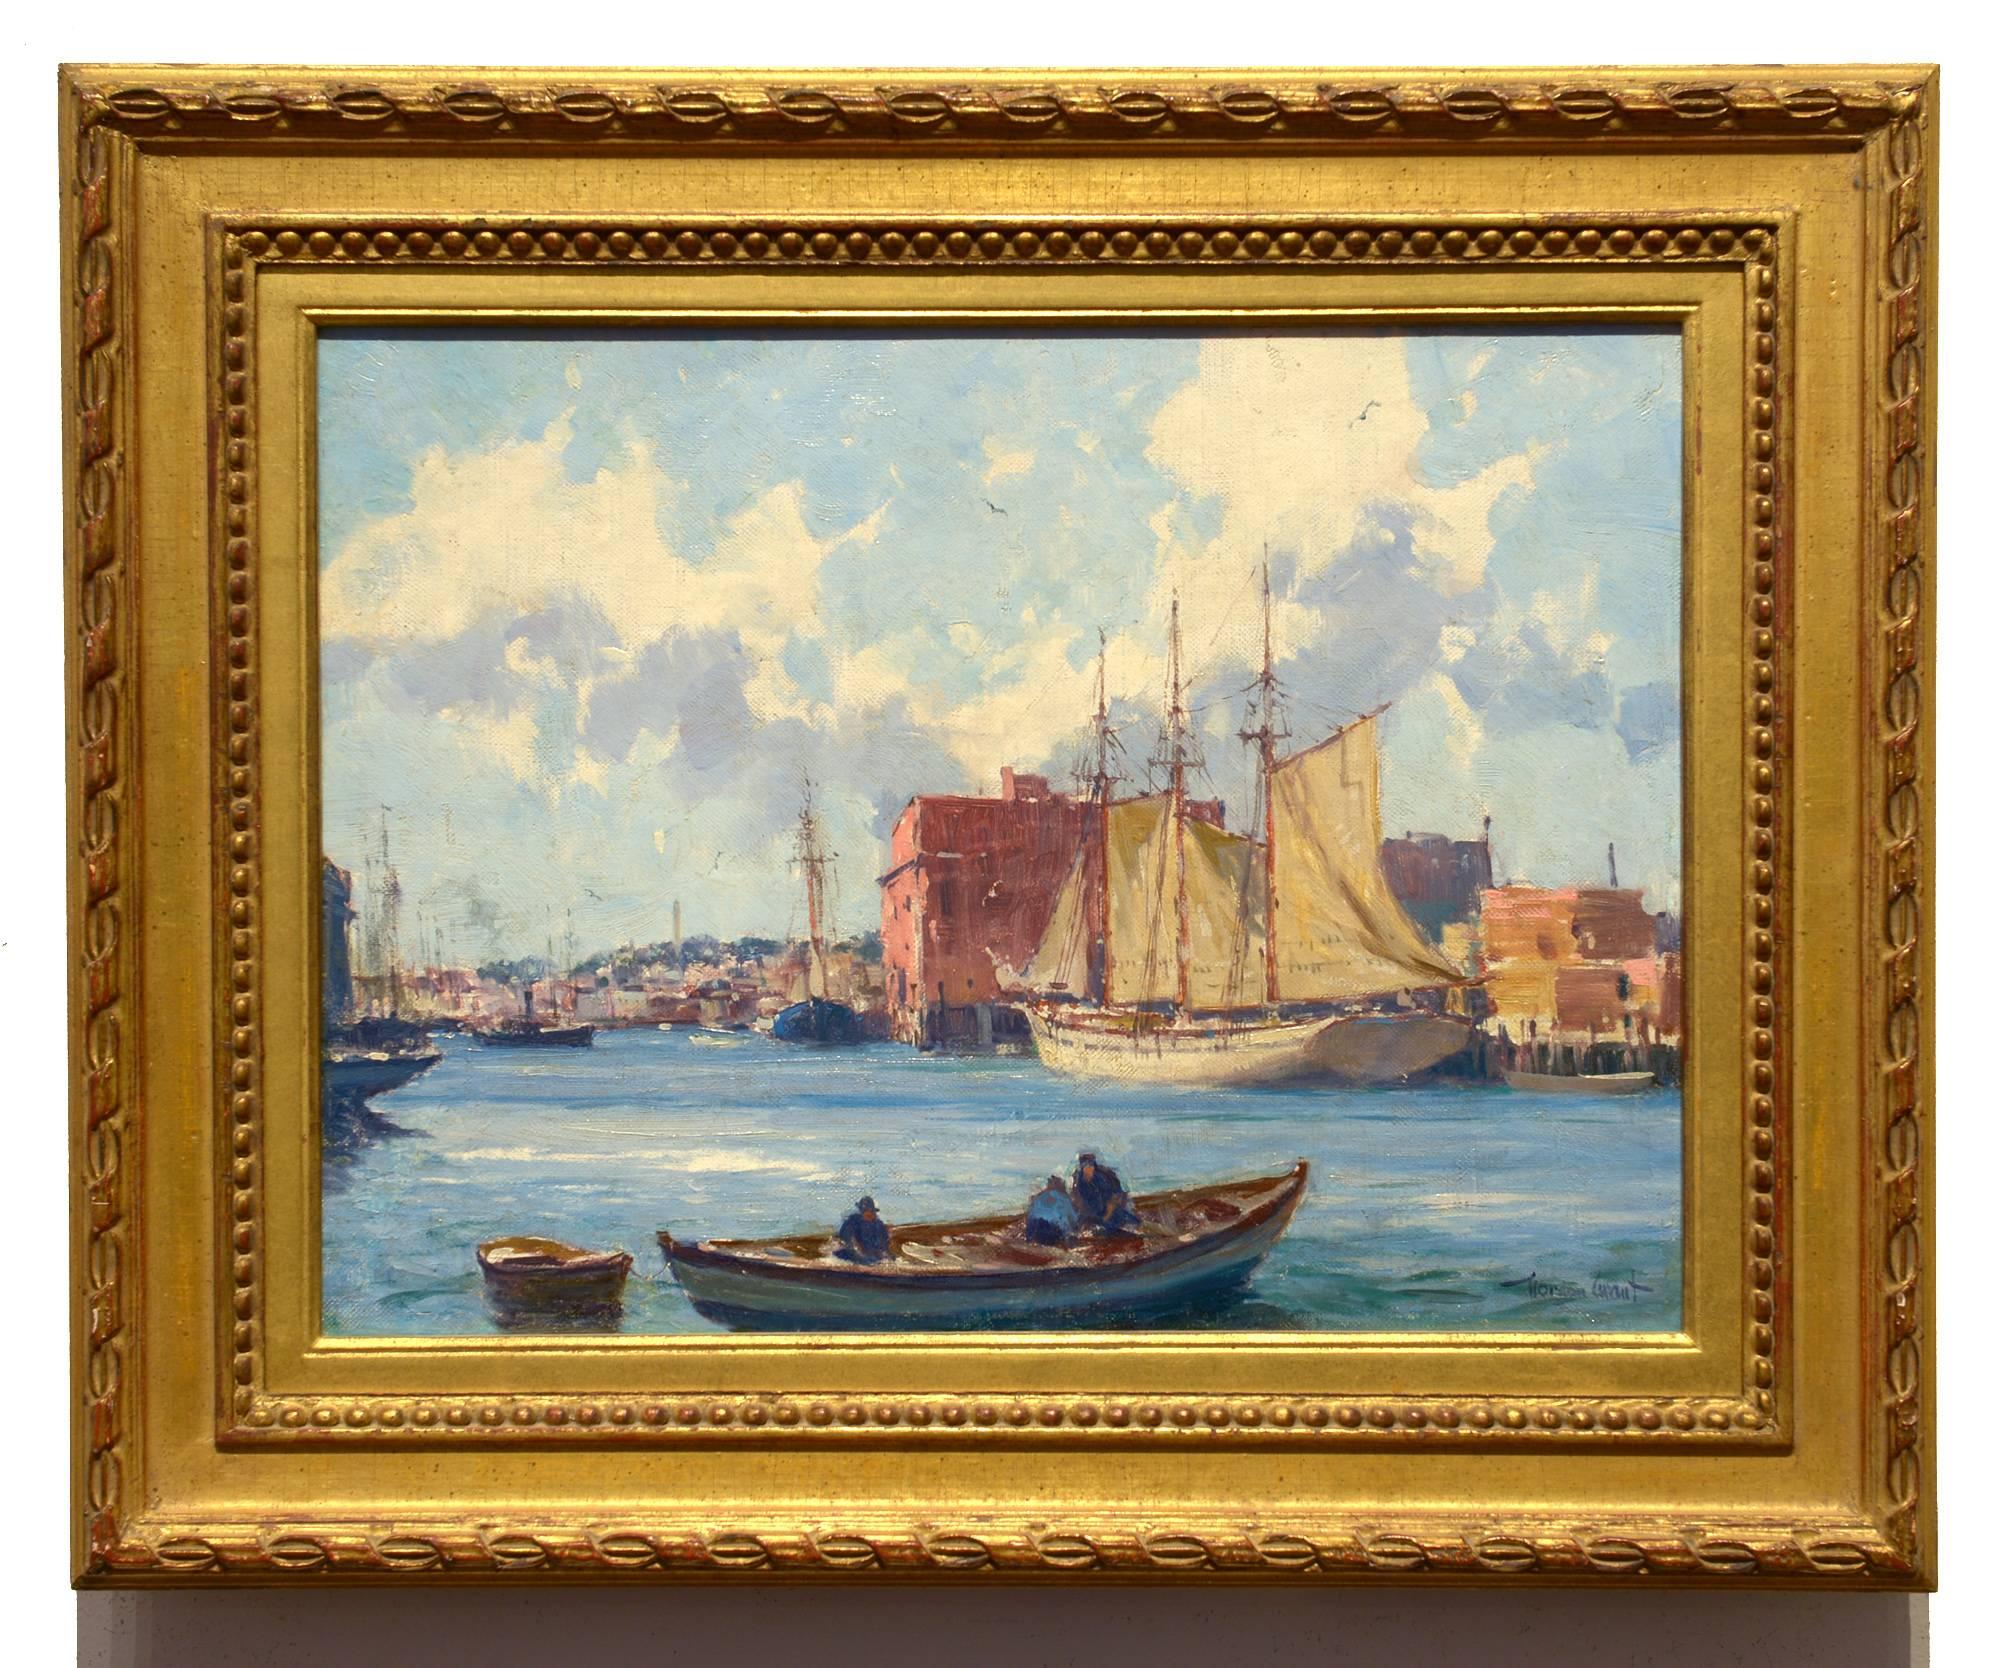 Fishermen at Harbor - Painting by Gordon Grant